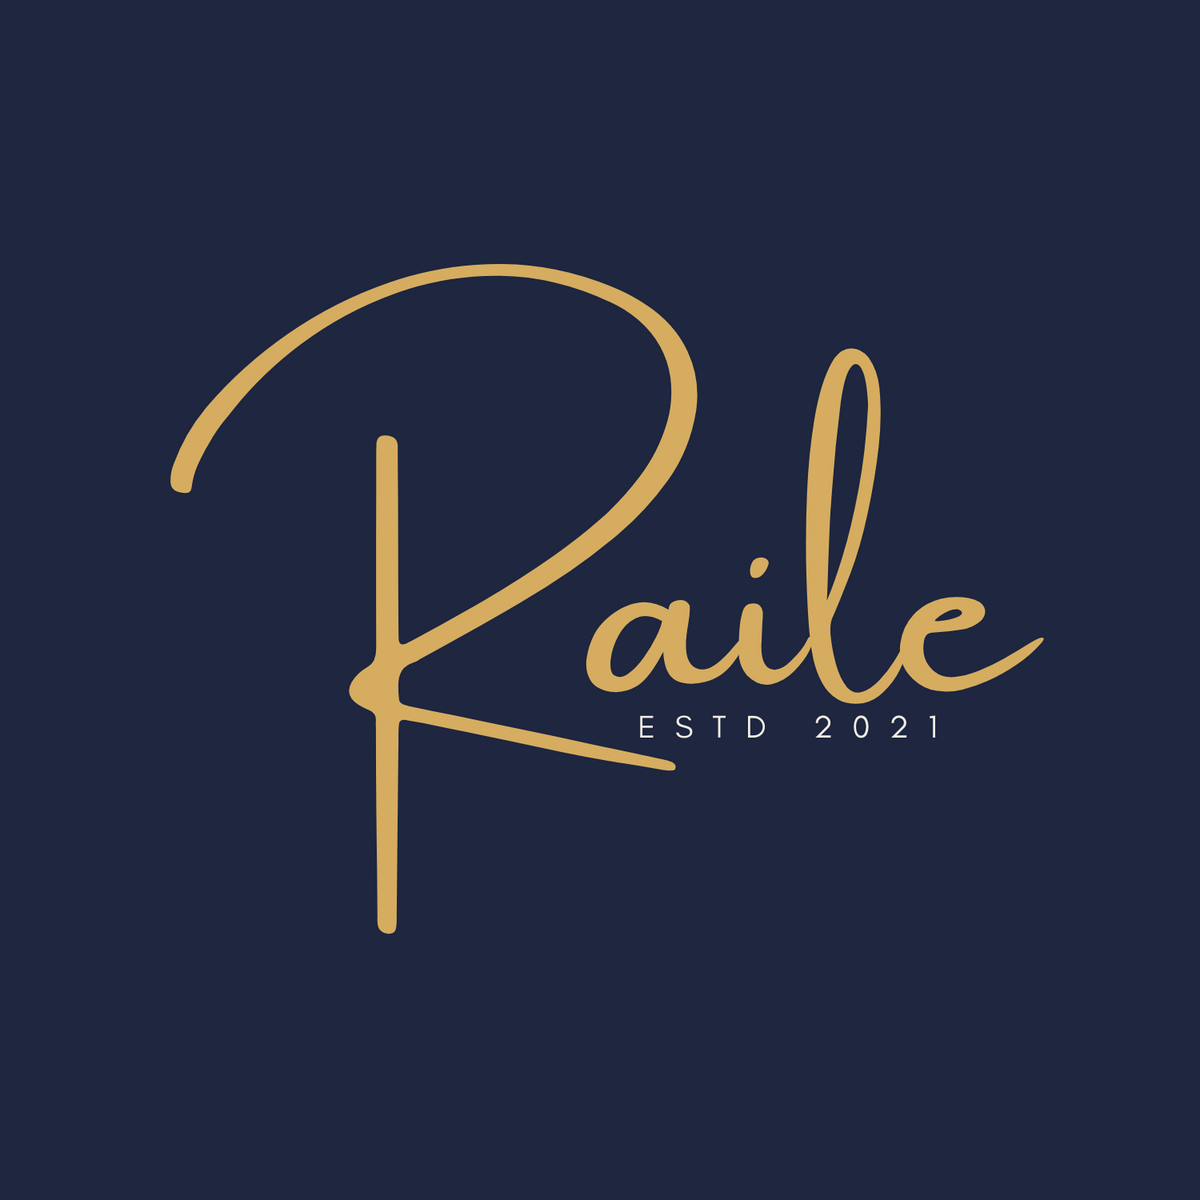 Raile Ltd